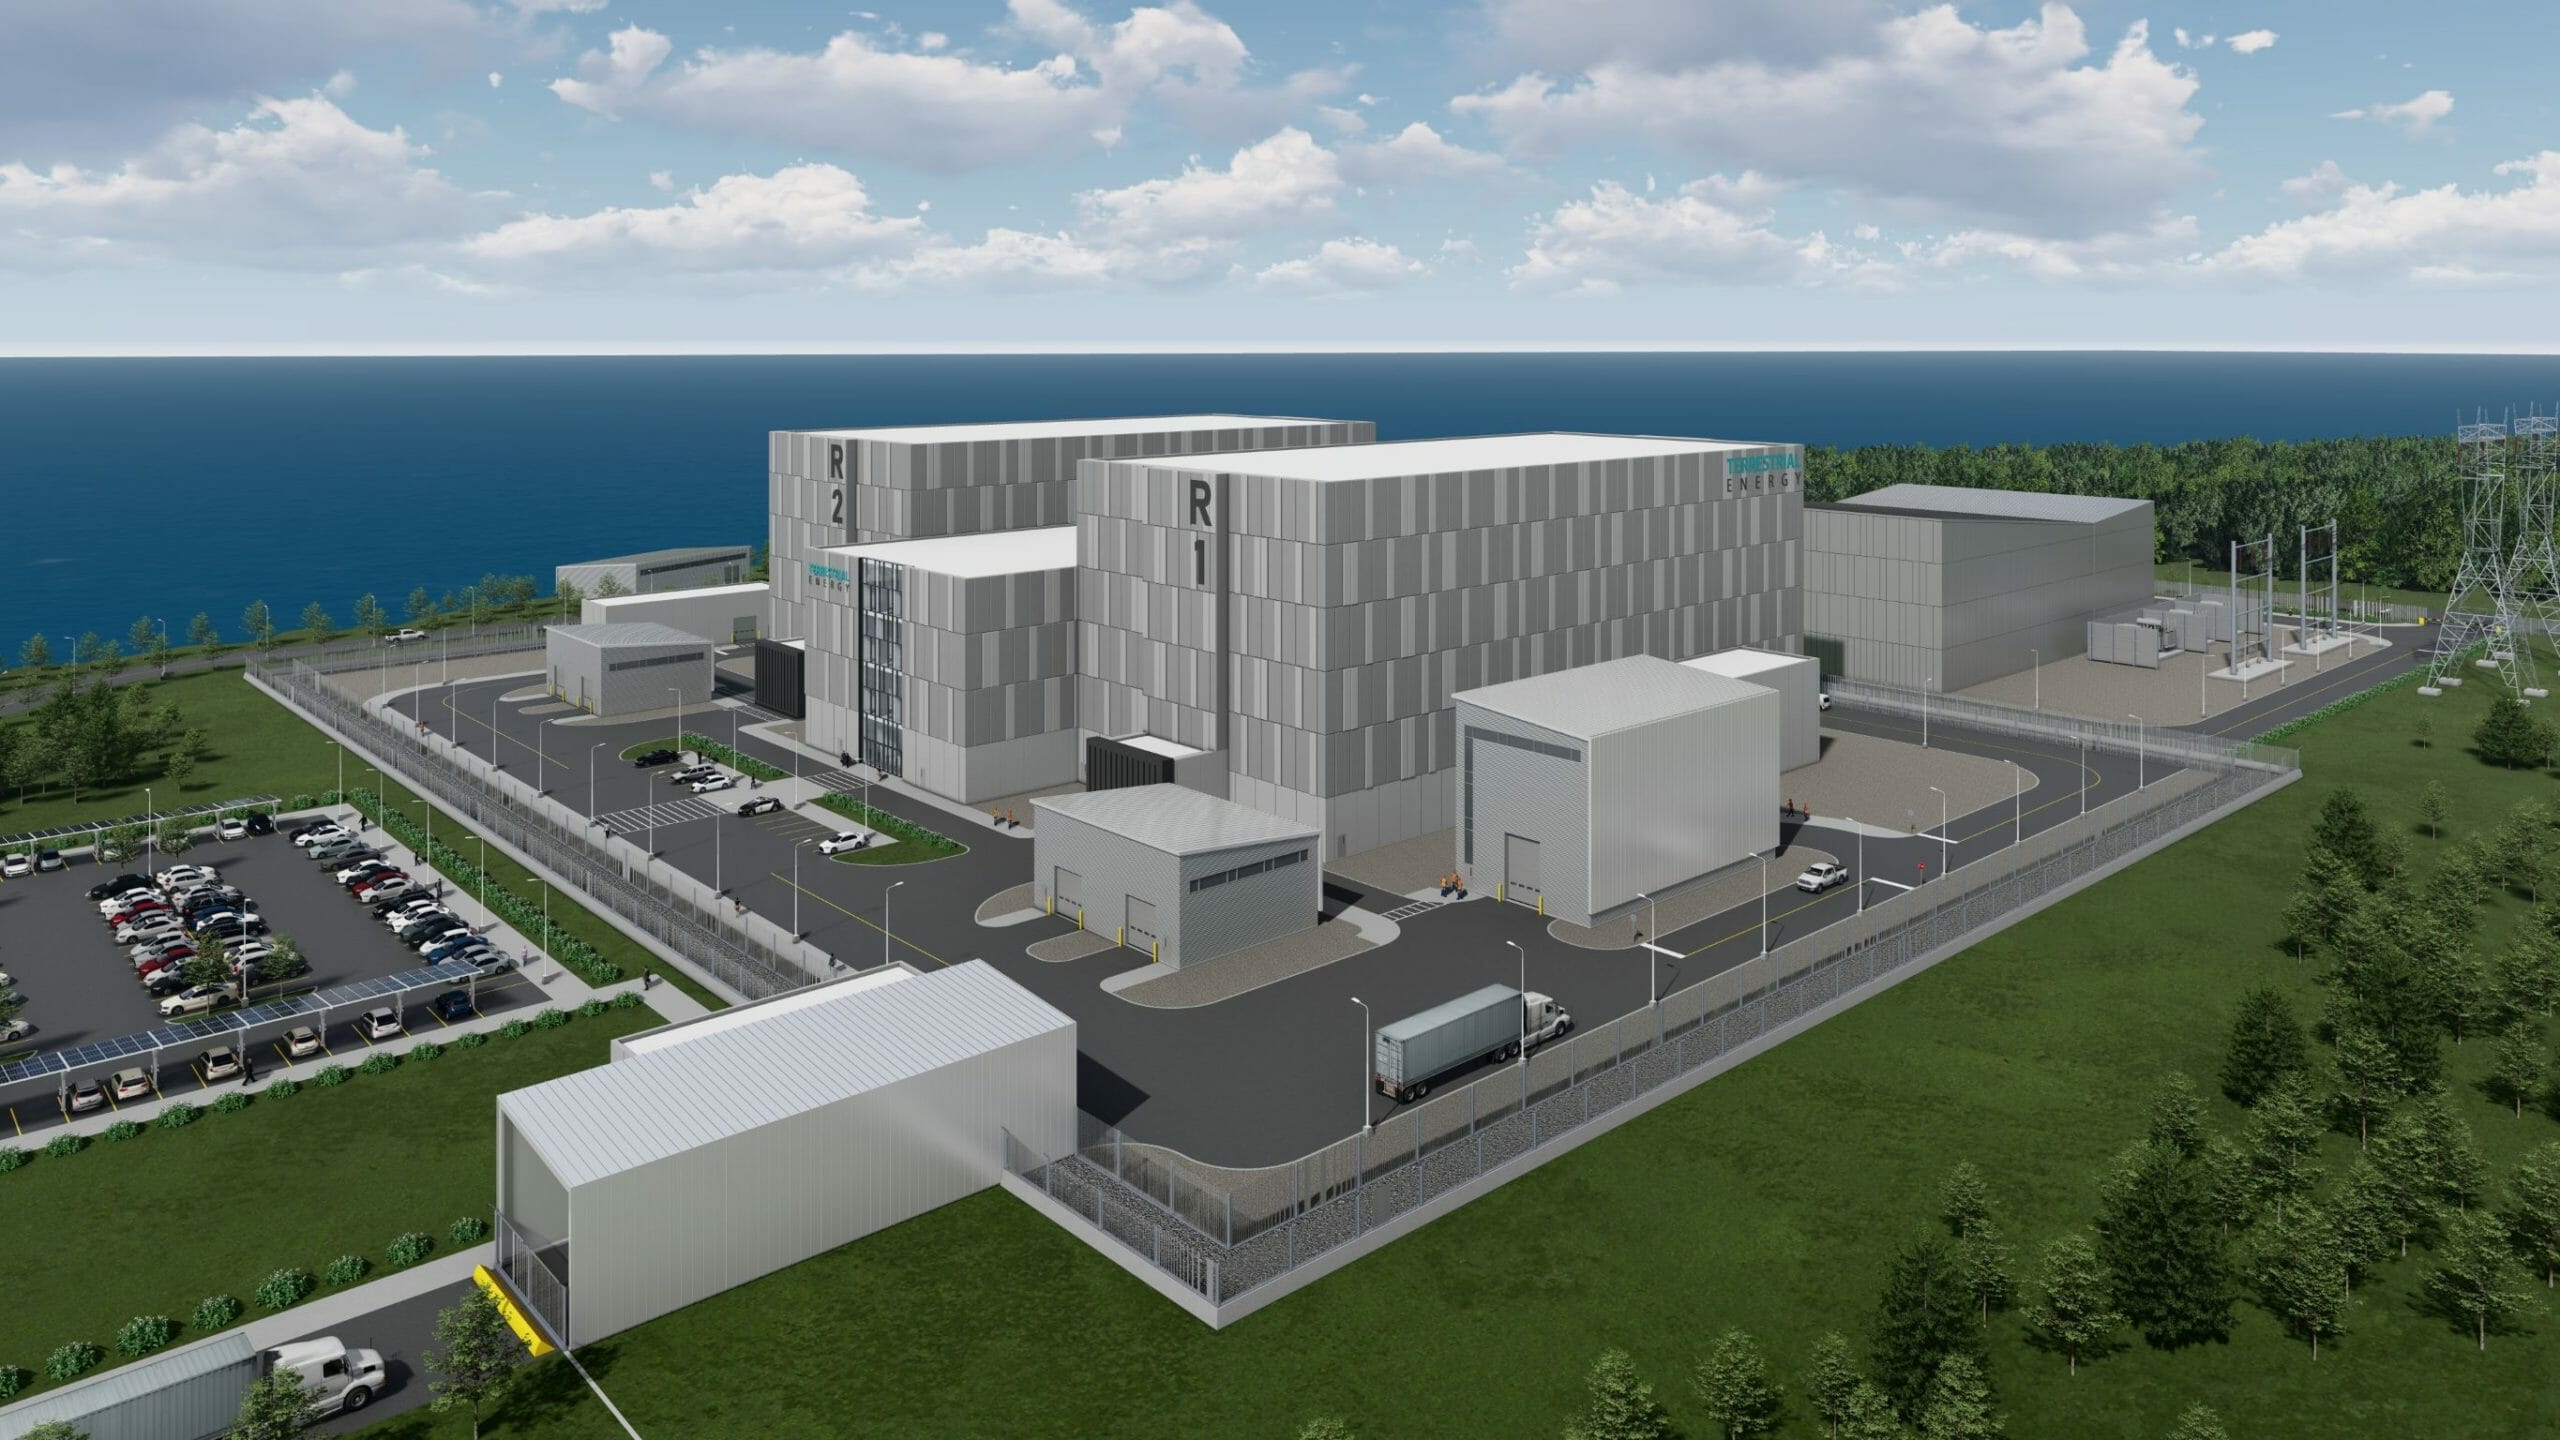 4th generation nuclear power plant - IMSR400 Illustration